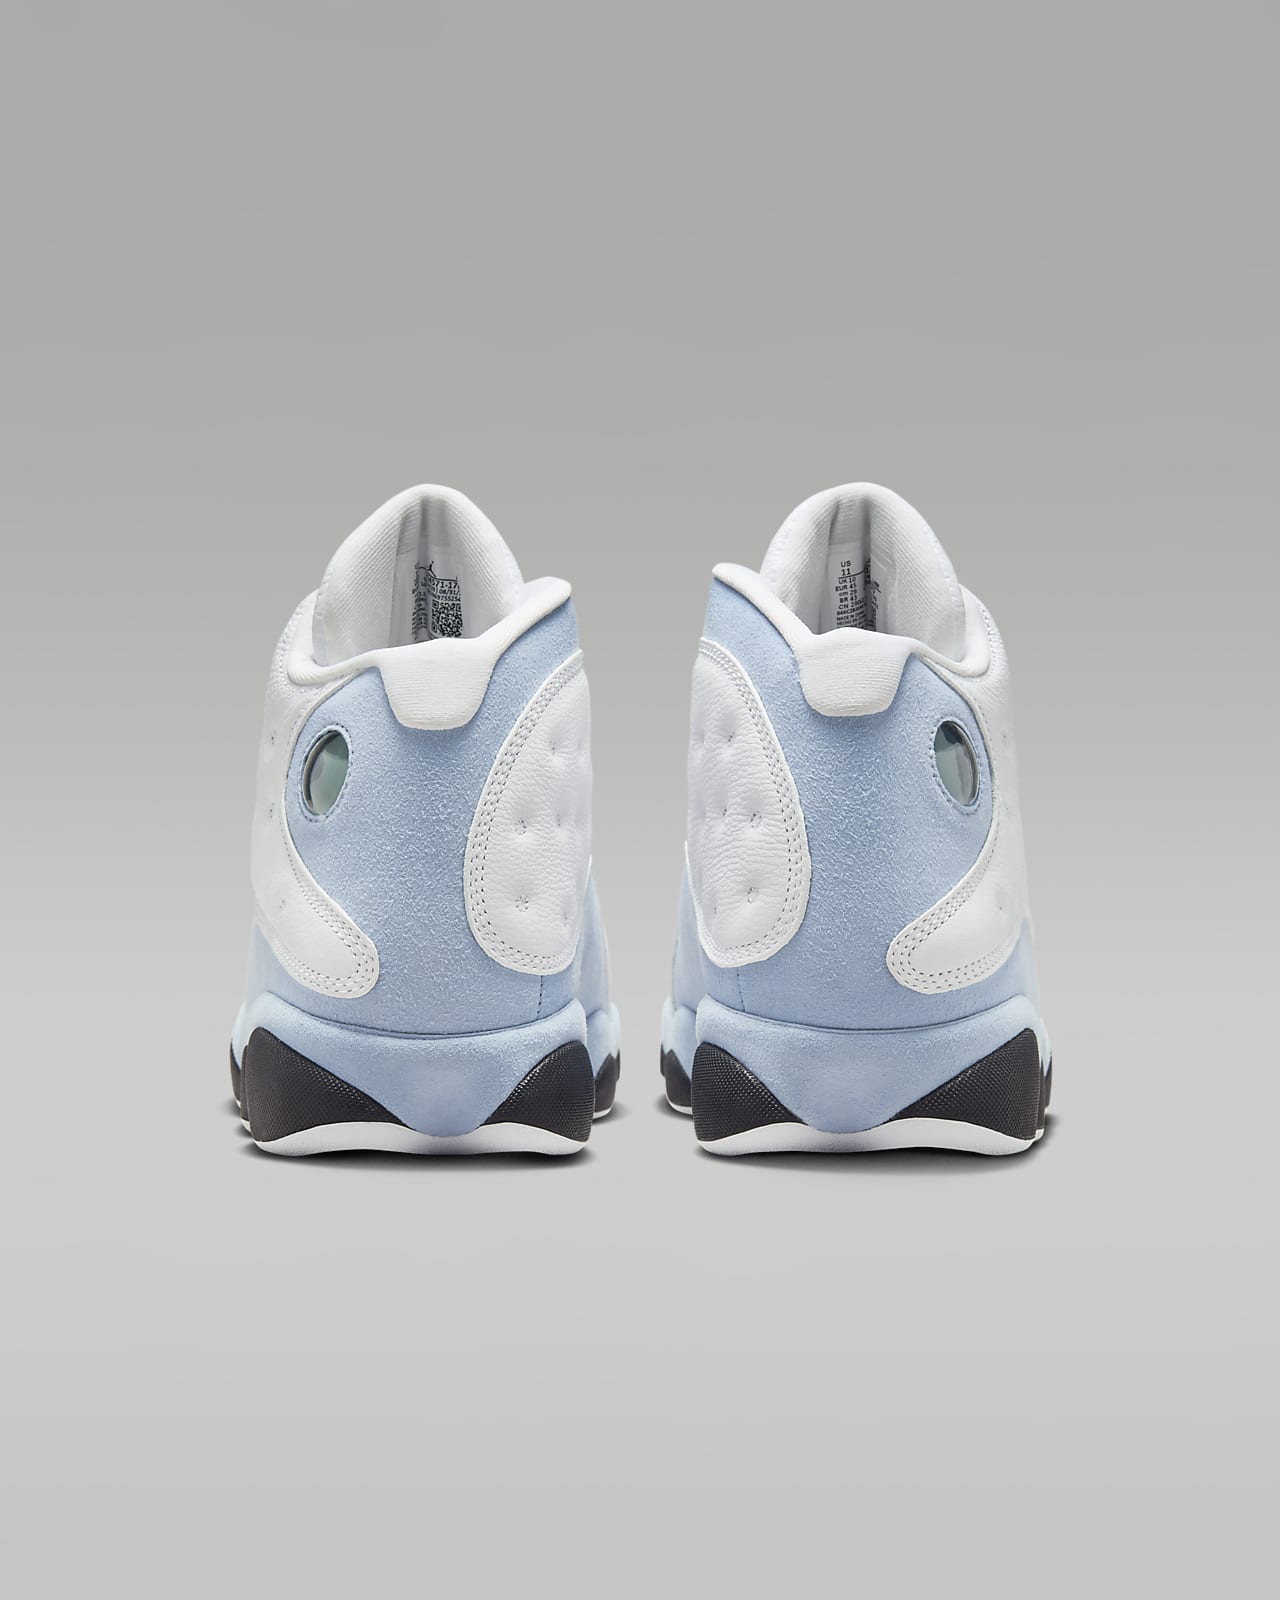 Air Jordan 13 Retro Blue Grey Men's Shoes.